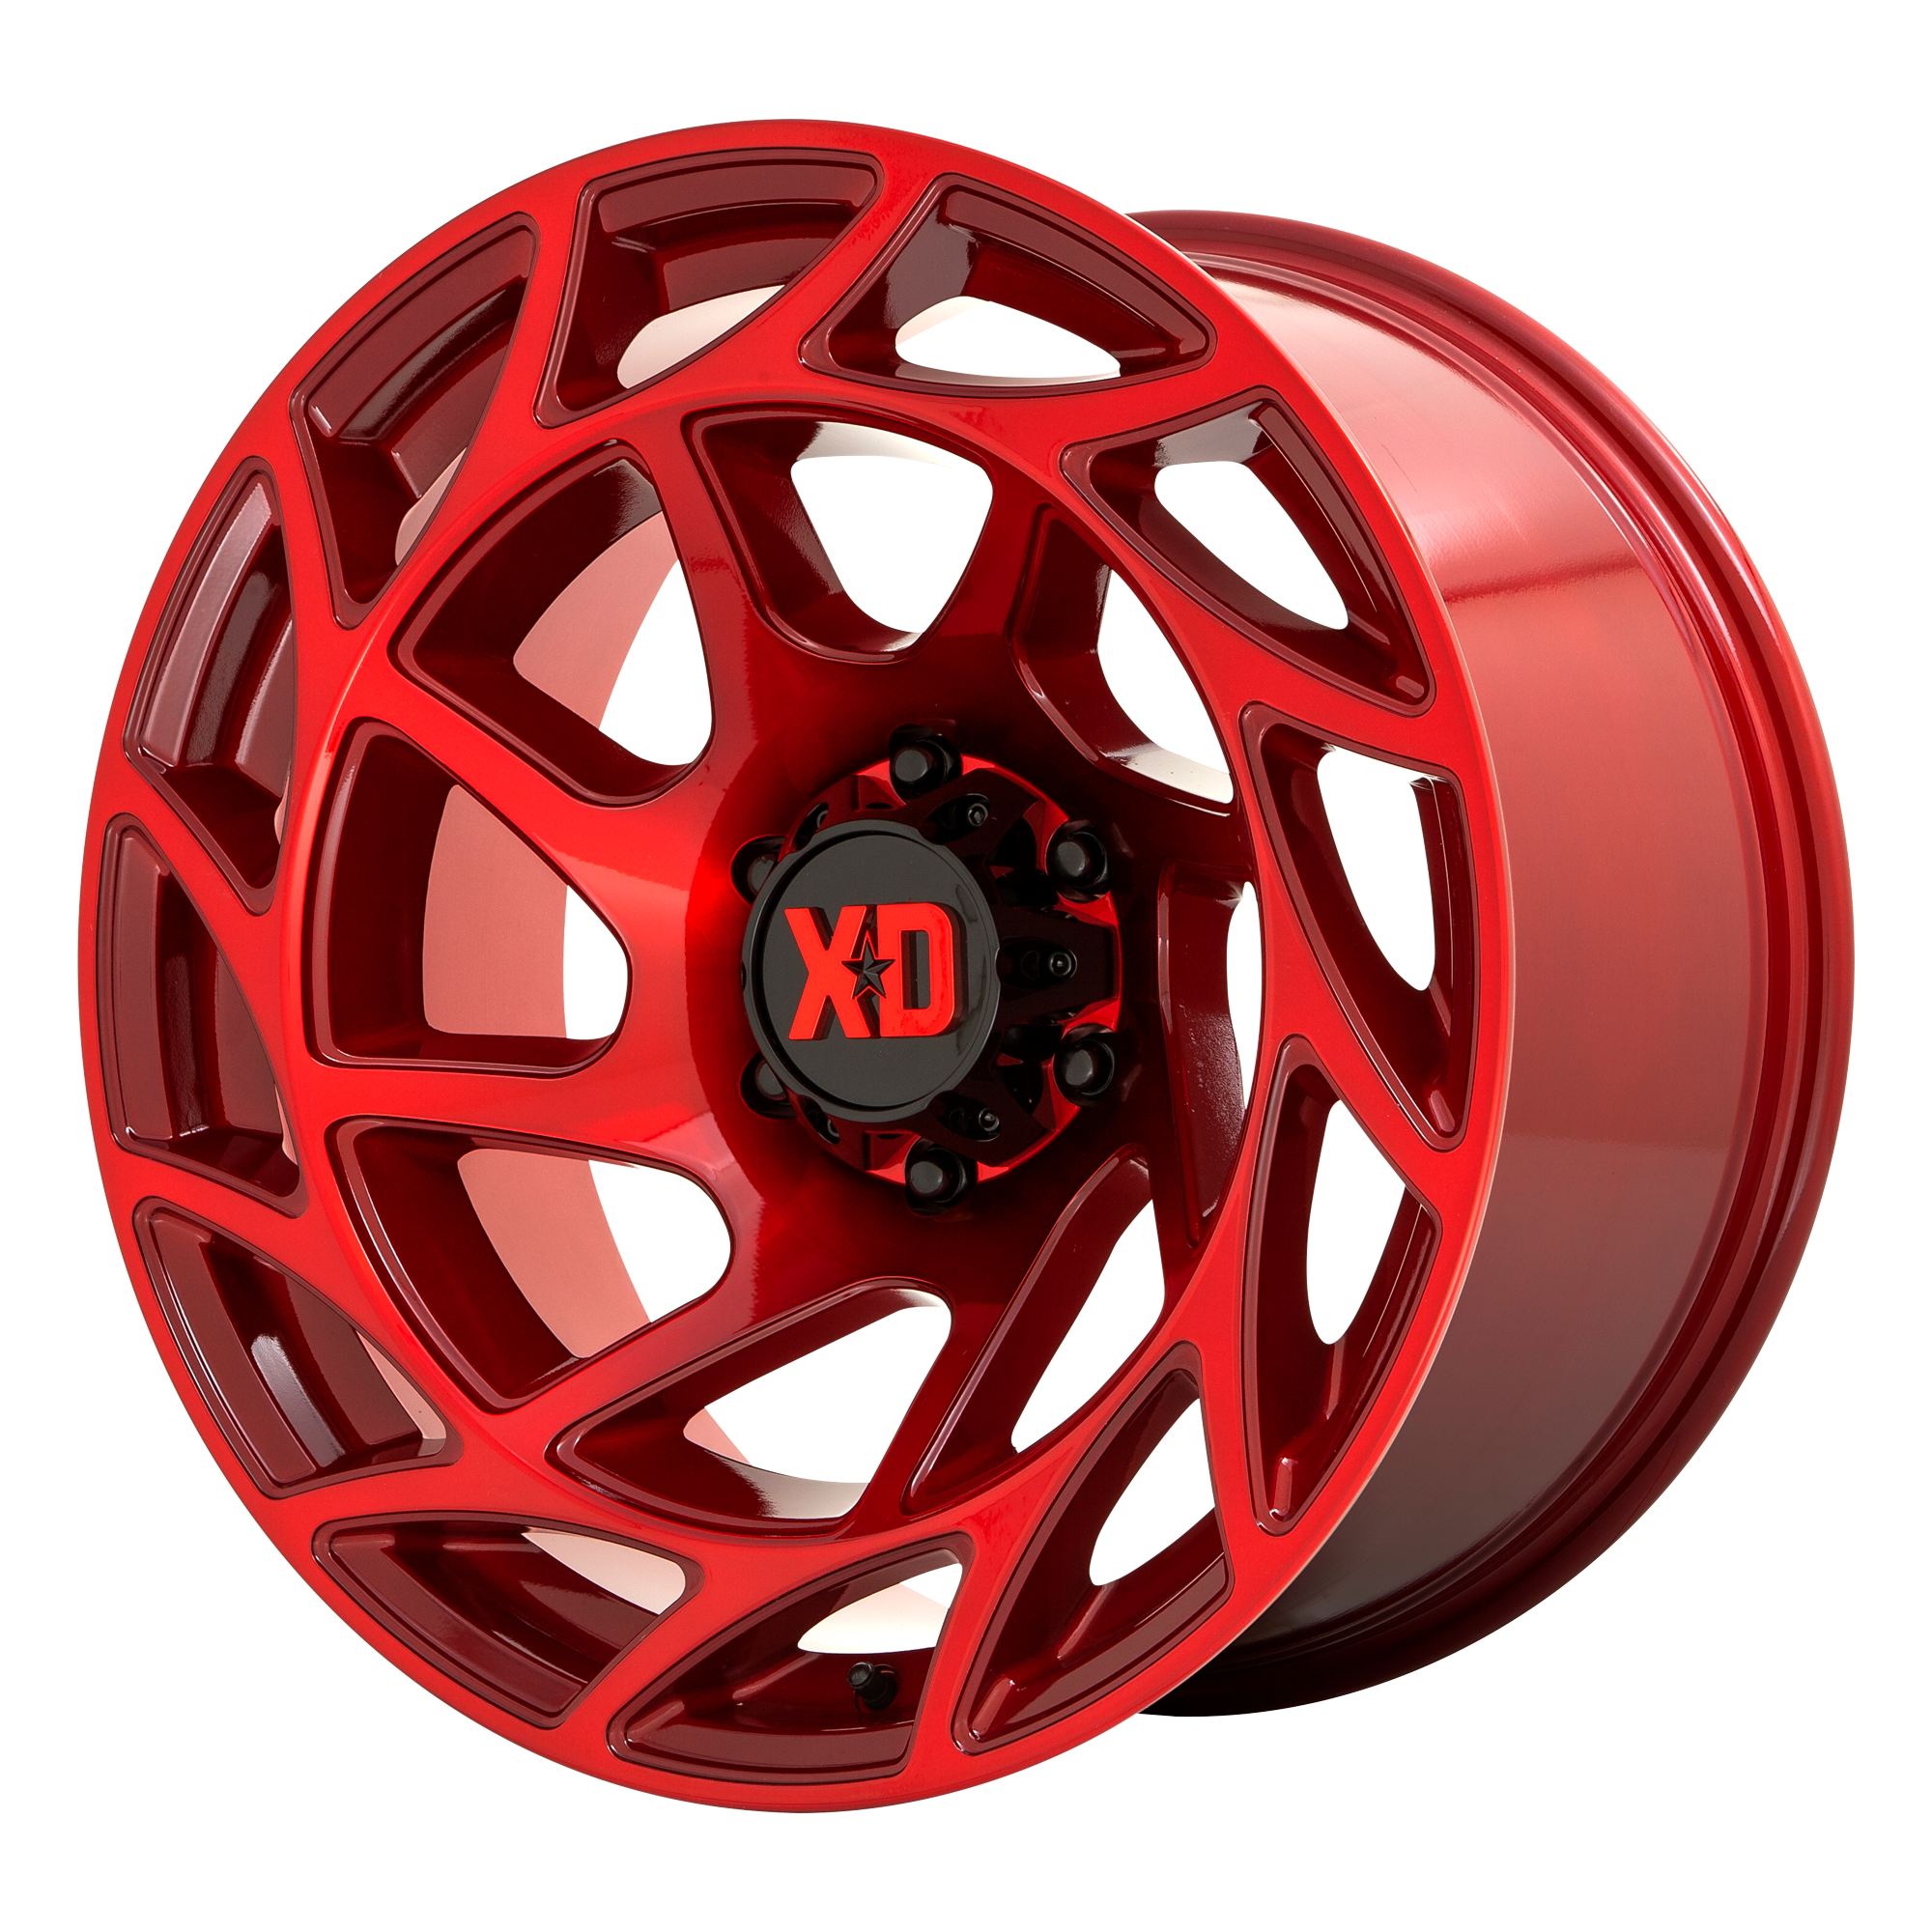 XD 20"x9" Non-Chrome Candy Red Custom Wheel ARSWCWXD86029063900